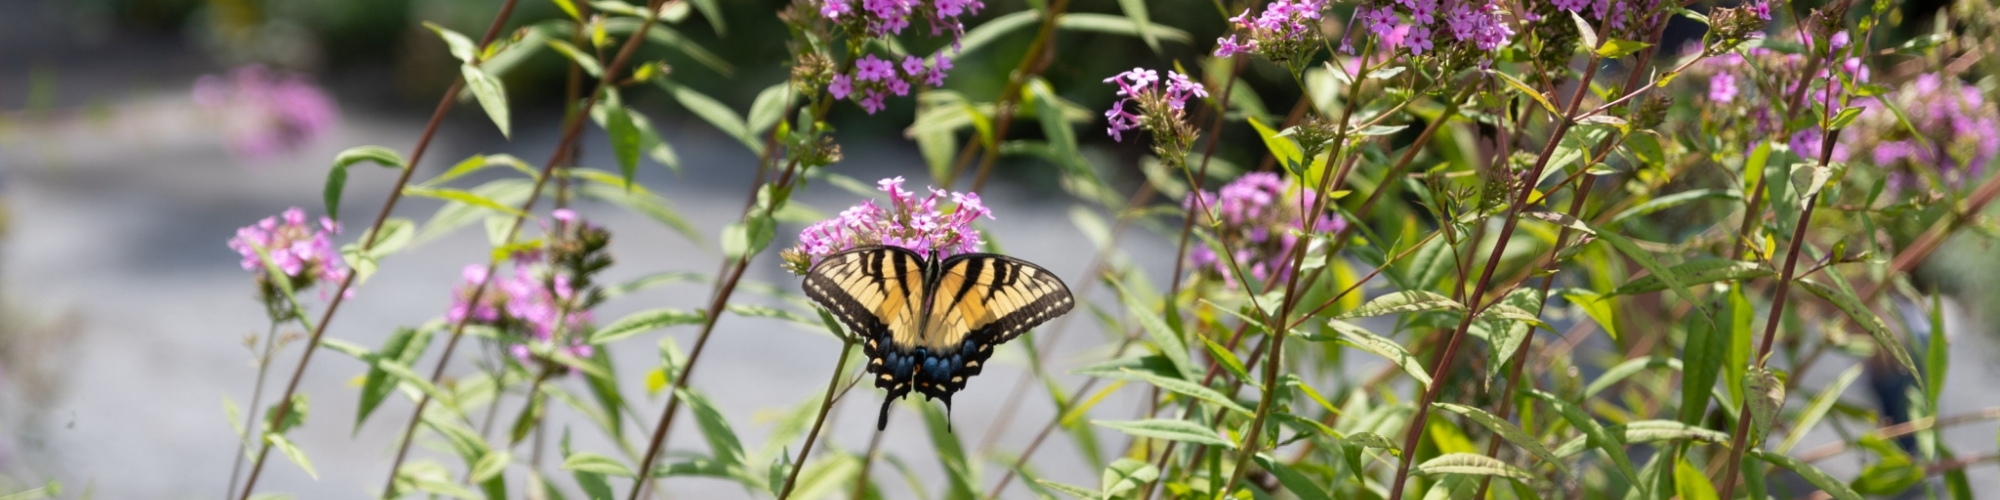 Butterflies & Blooms at The Delaware Botanic Gardens